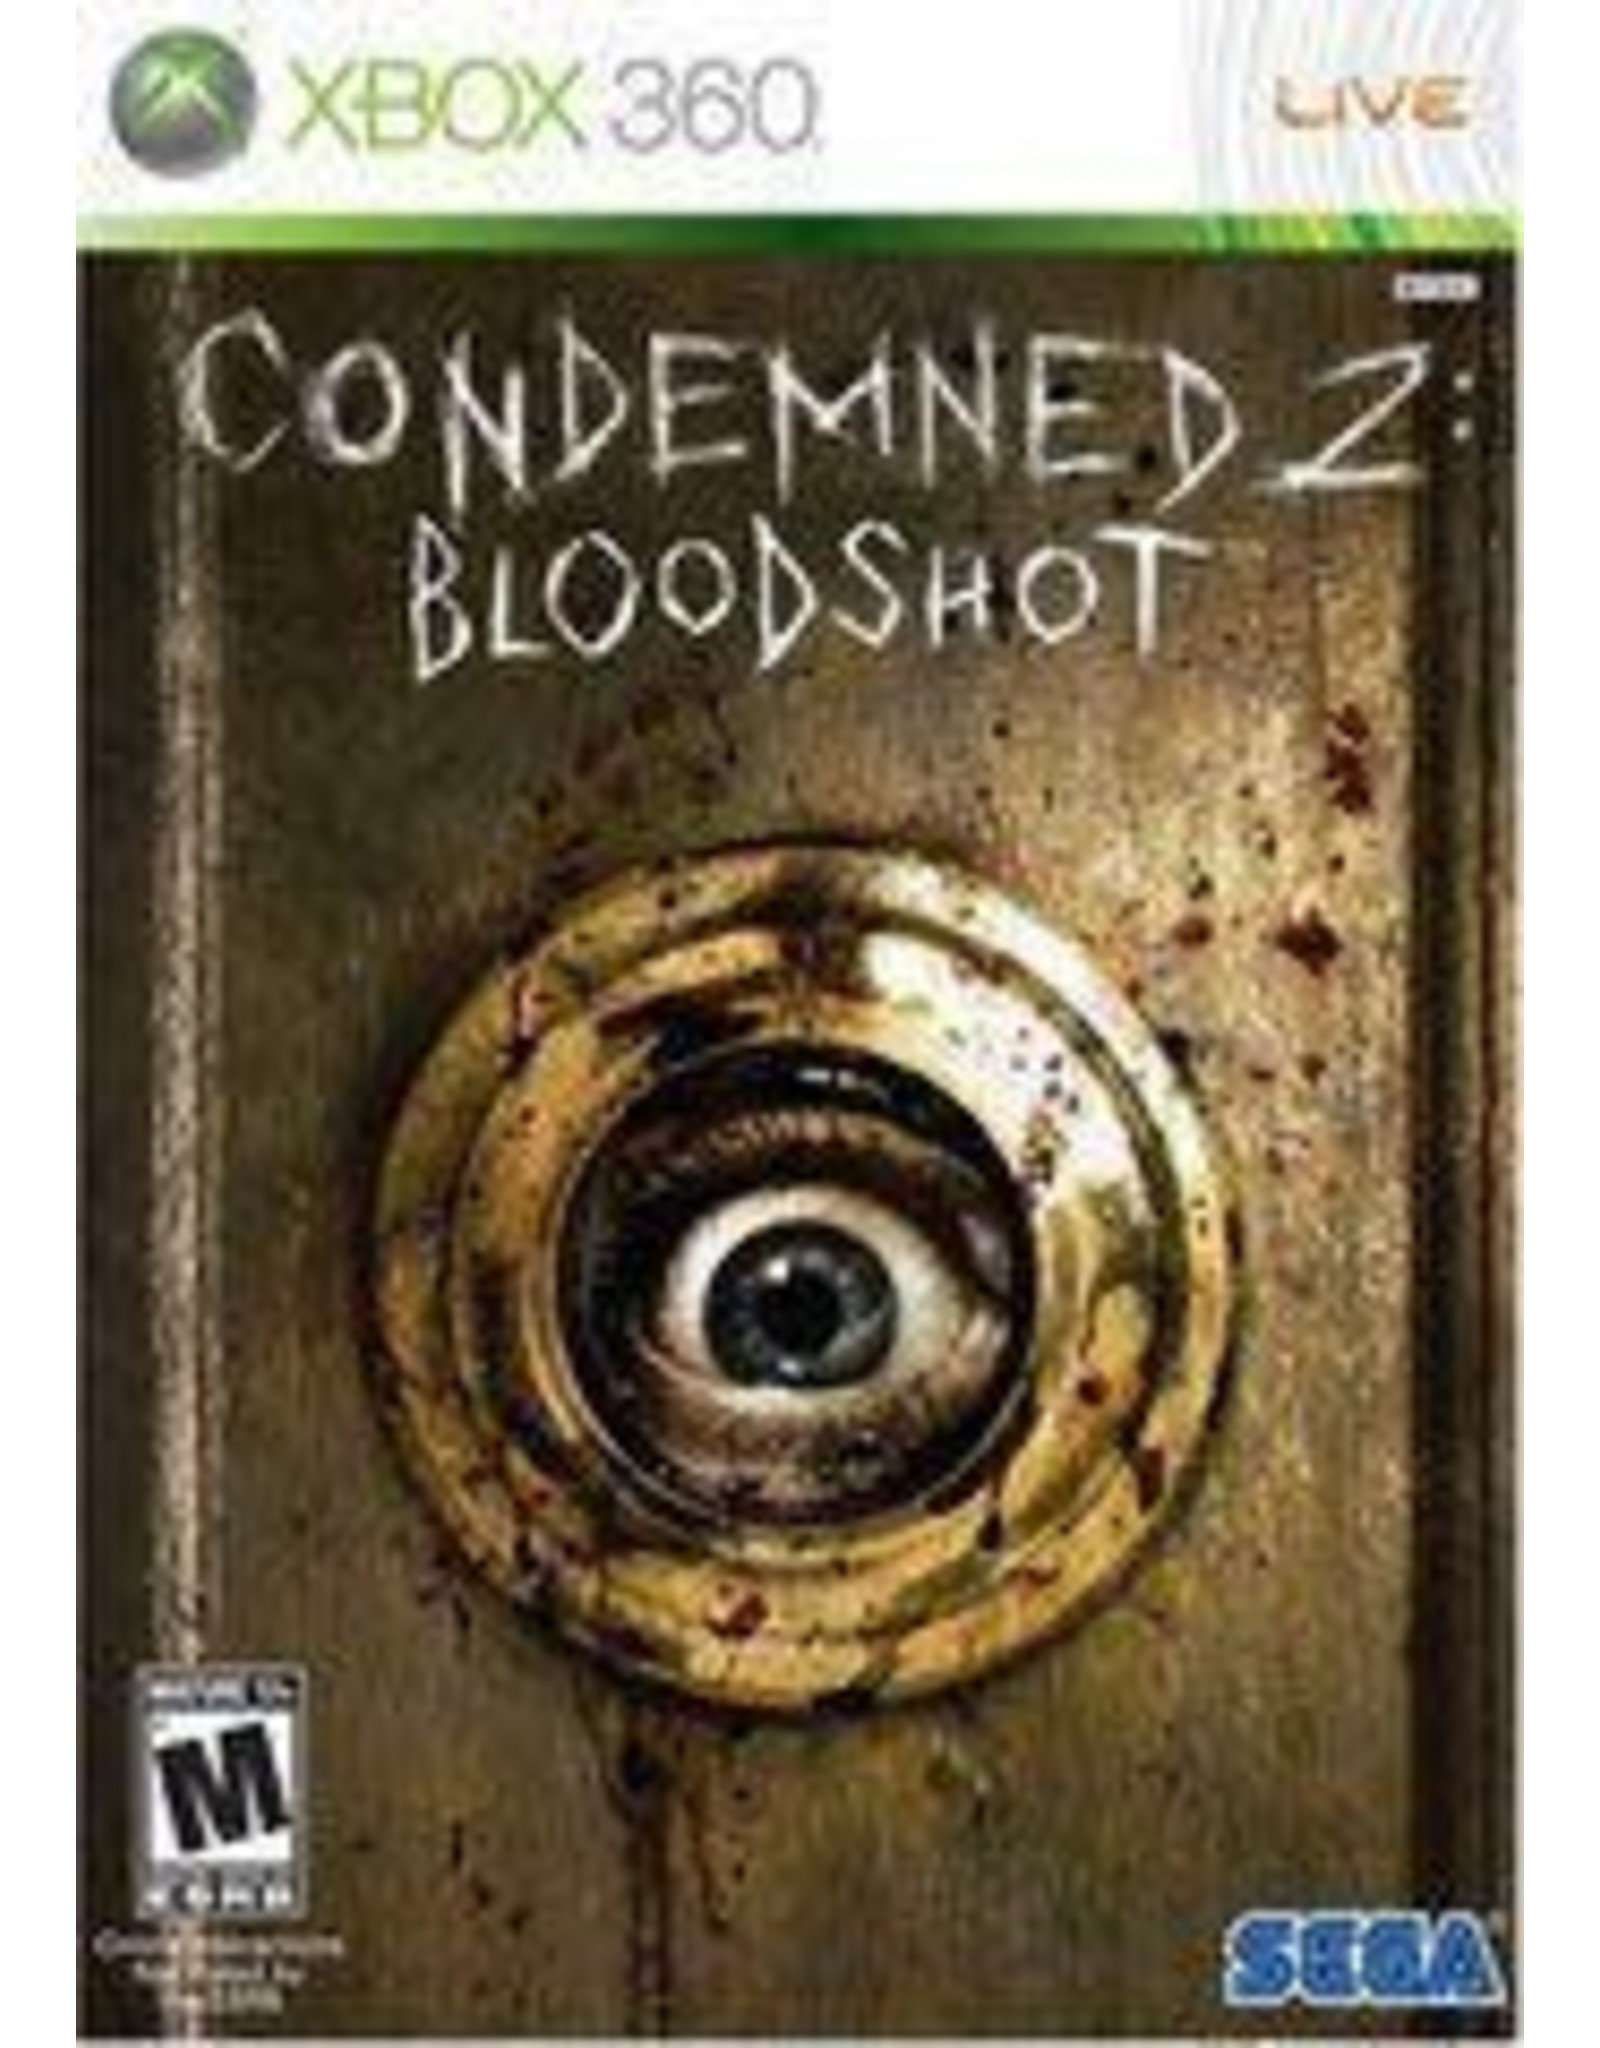 Xbox 360 Condemned 2 Bloodshot (CiB)